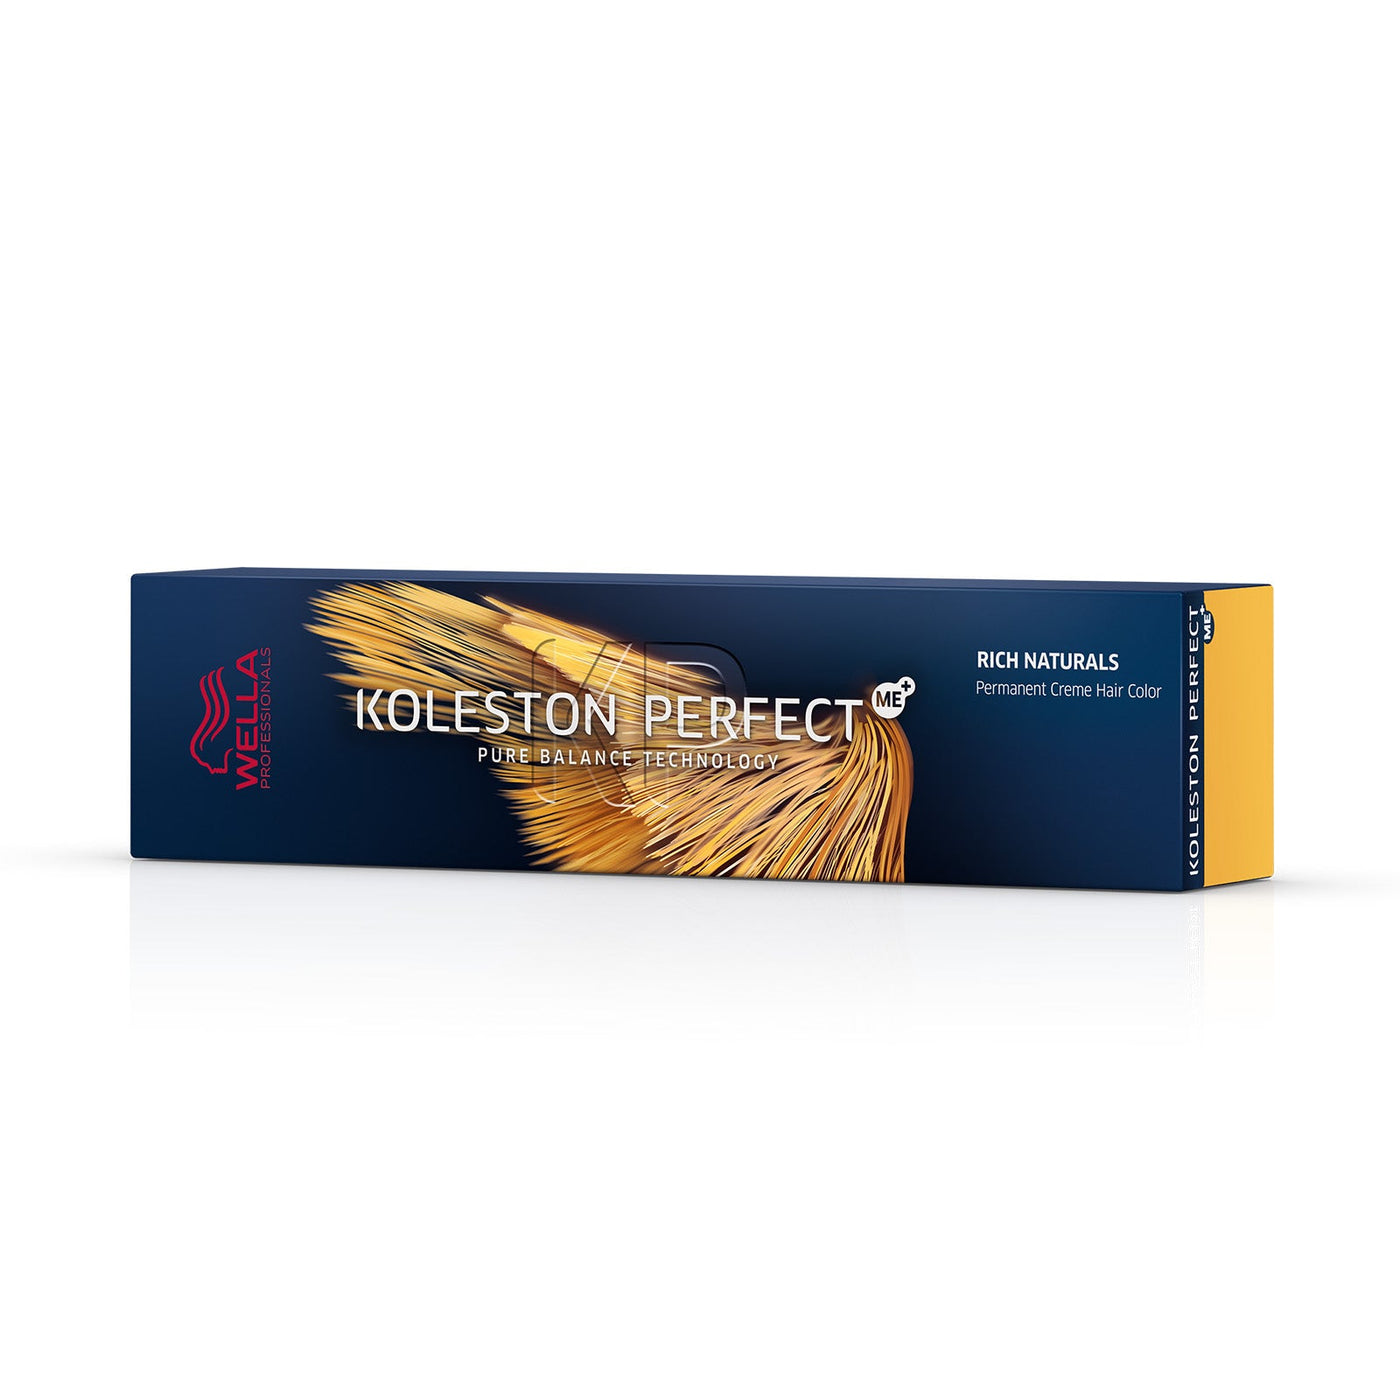 Wella Professionals Koleston Perfect Permanent Hair Colour (60g) - Rich Naturals packaging